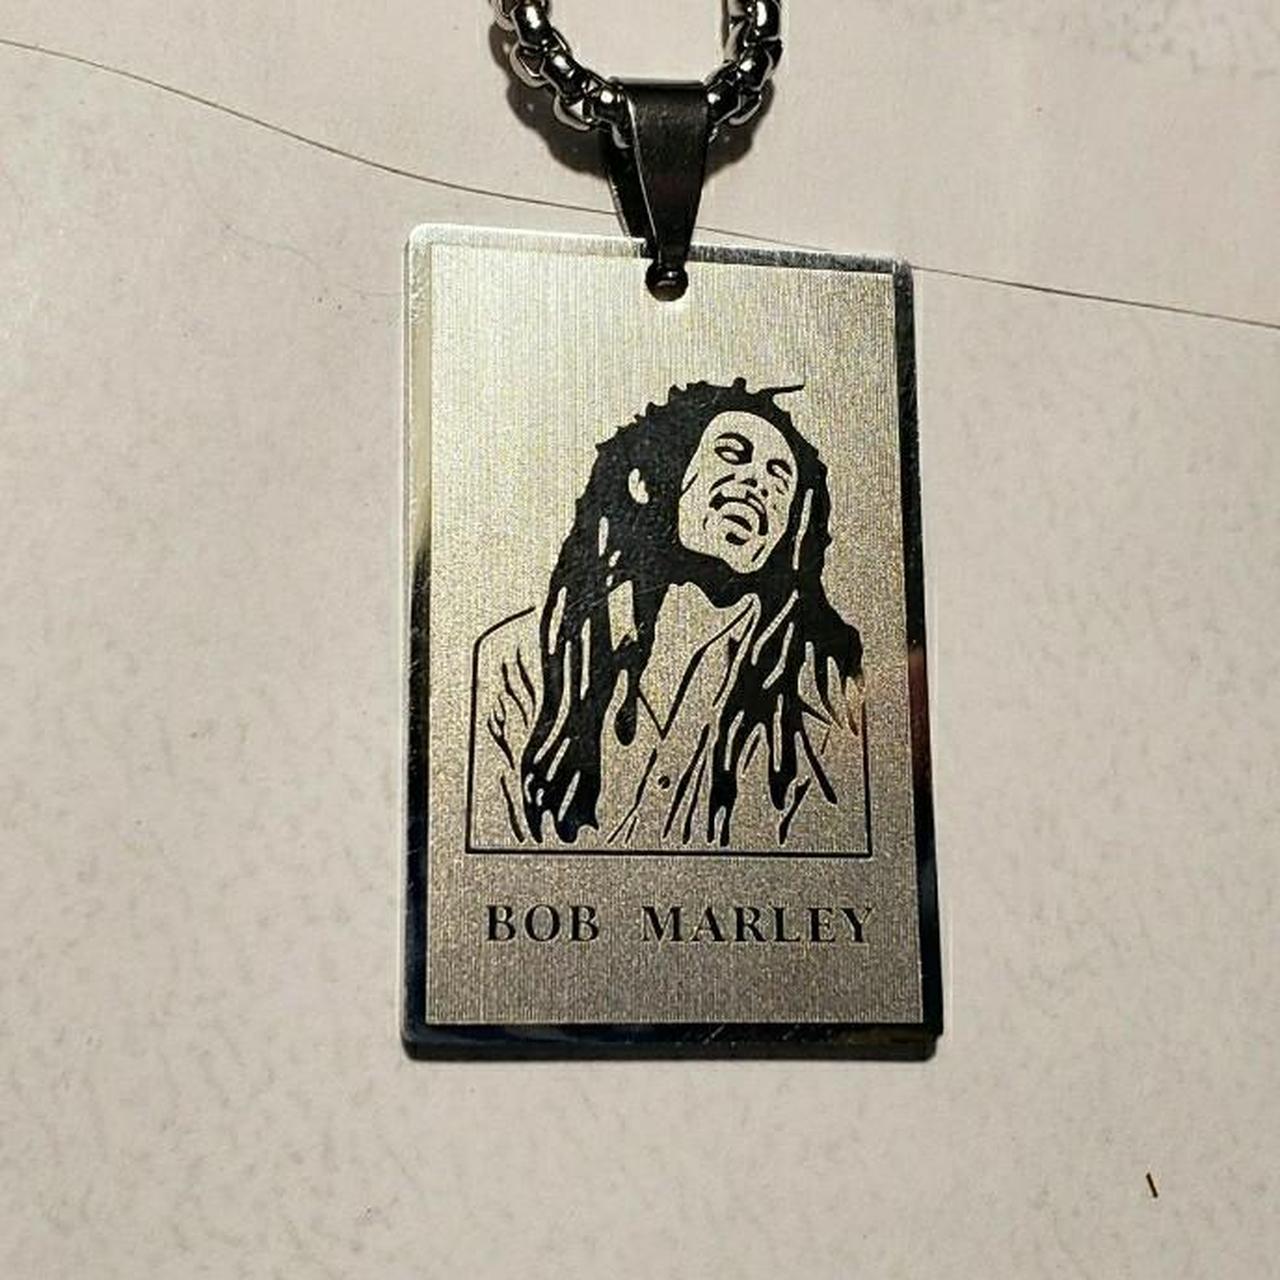 Bob Marley, Rasta and Reggae, Weed Themed Jewelry | RastaEmpire.com